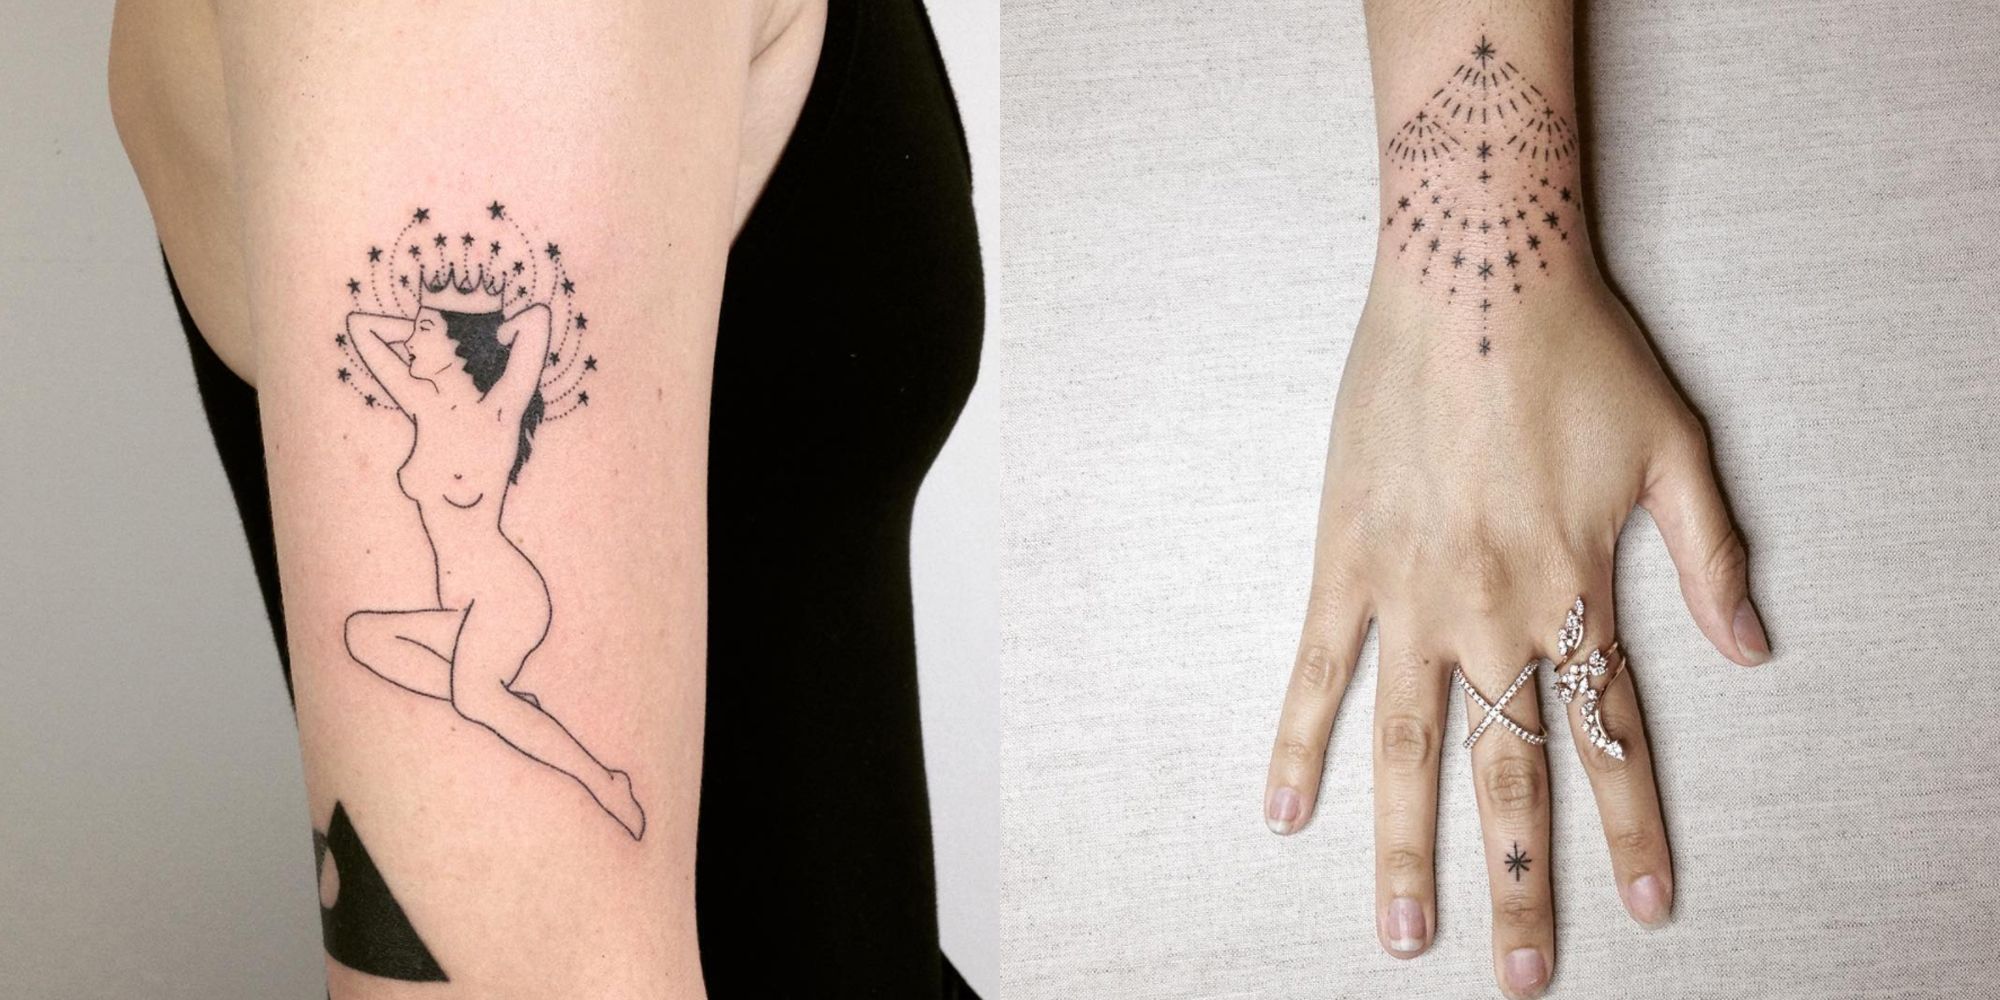 19 Best Tattoo Artists on Instagram  Instagram Tattoo Artists To Follow Now